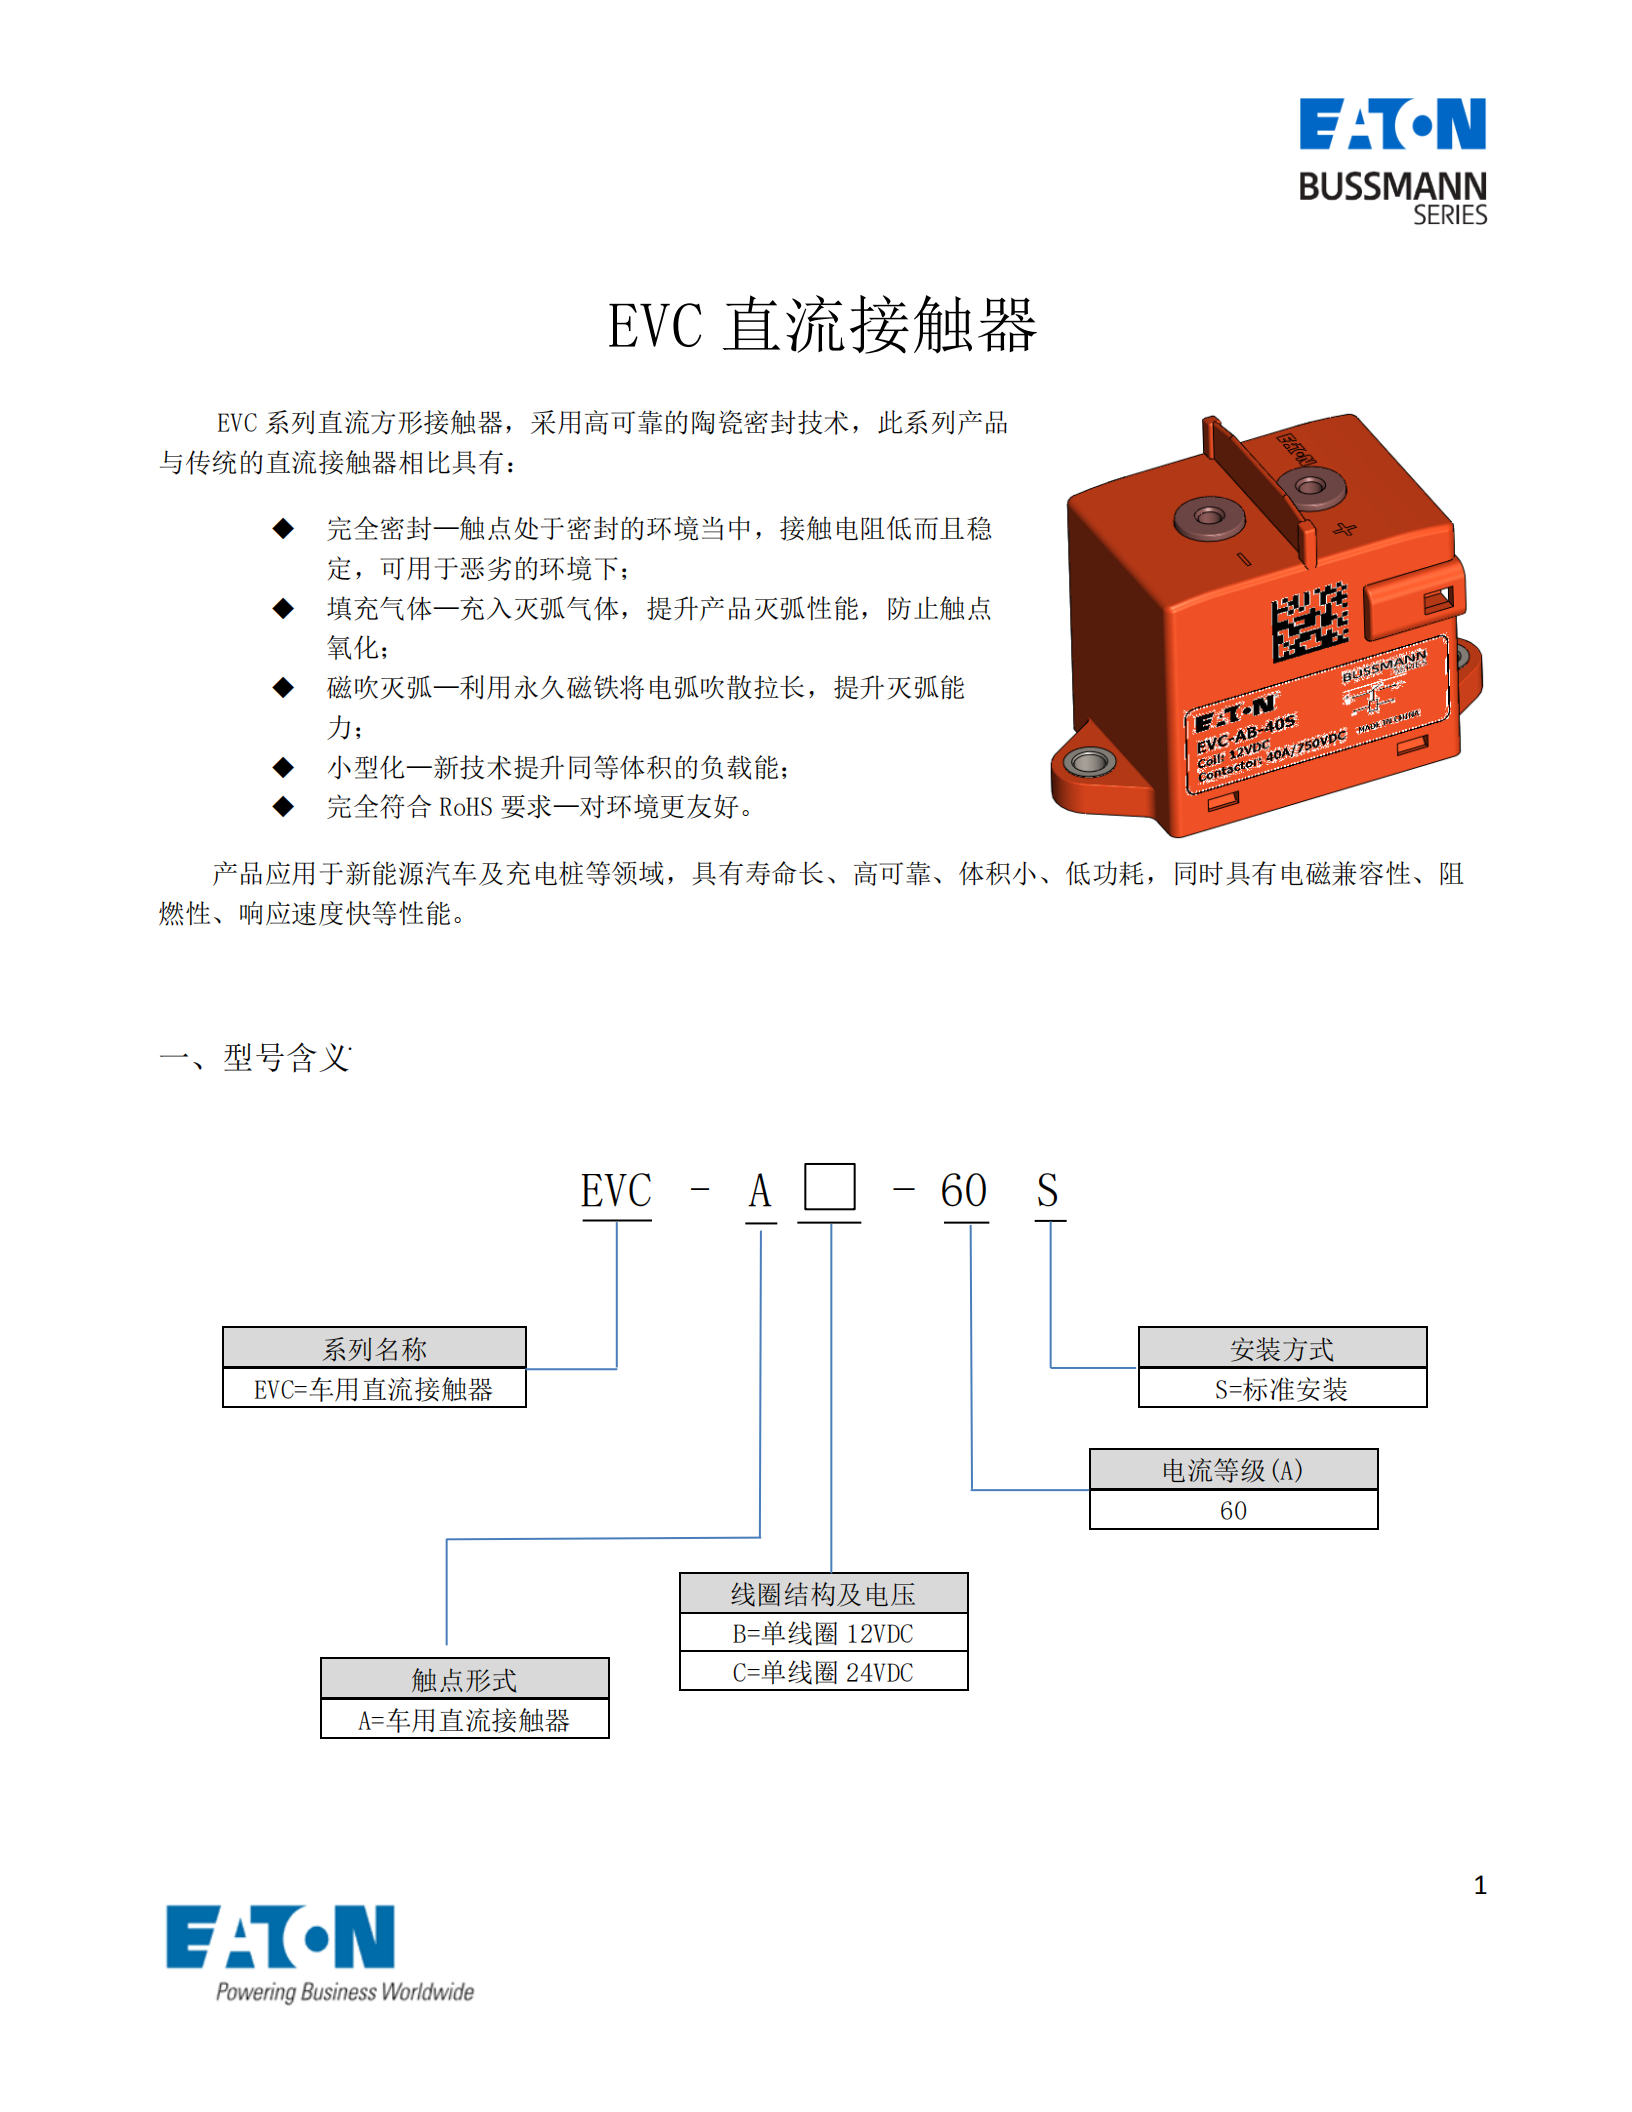 EVC-AB-60S直流接觸器